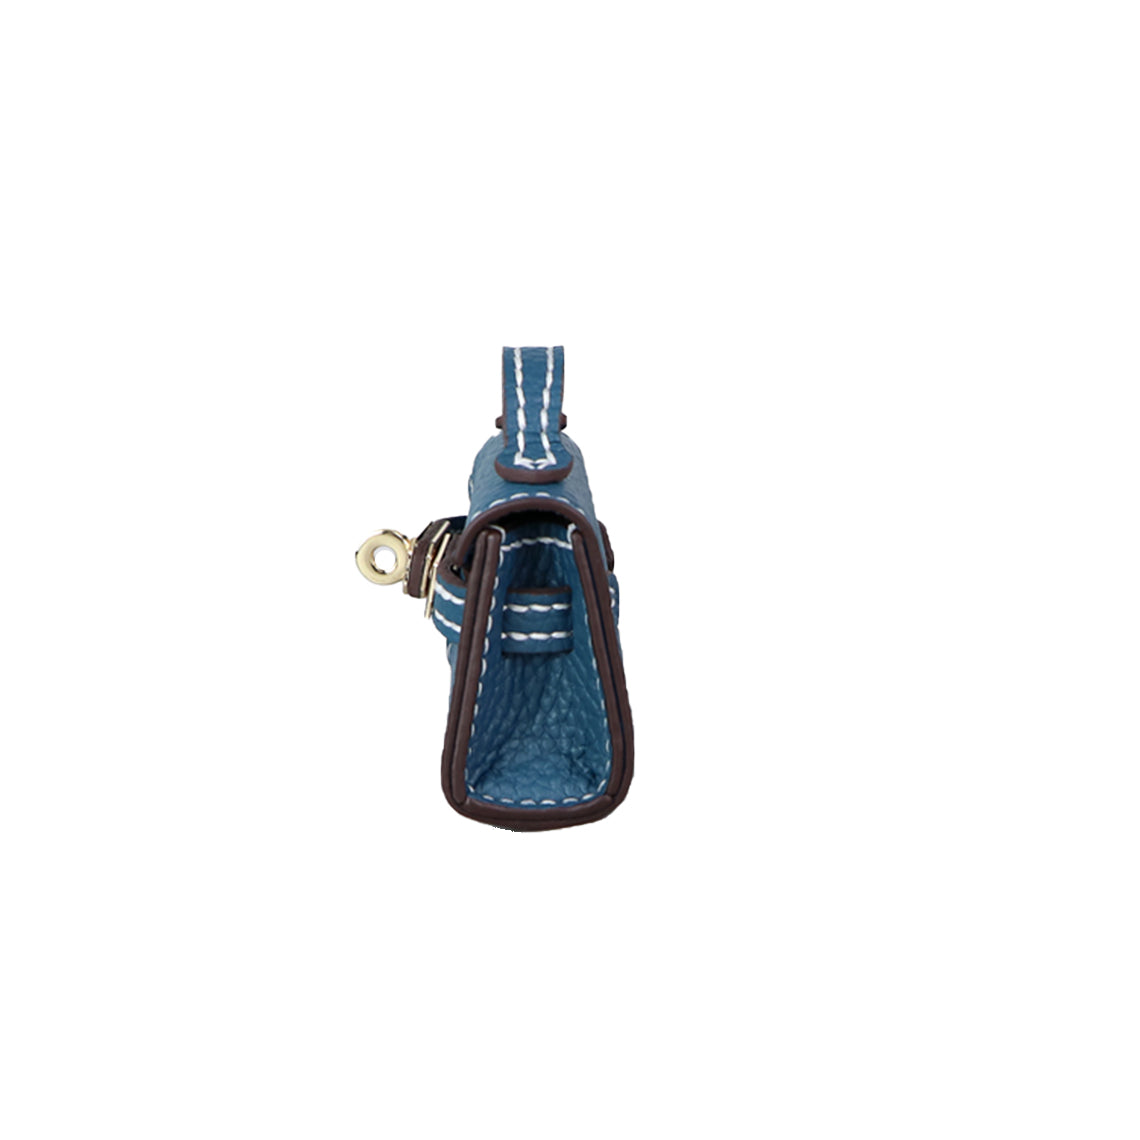 DIY Keychain Kit Bag Charm Making Patterns | Designer Leather Bag Charm Mini Kelly Bag Charm - POPSEWING™